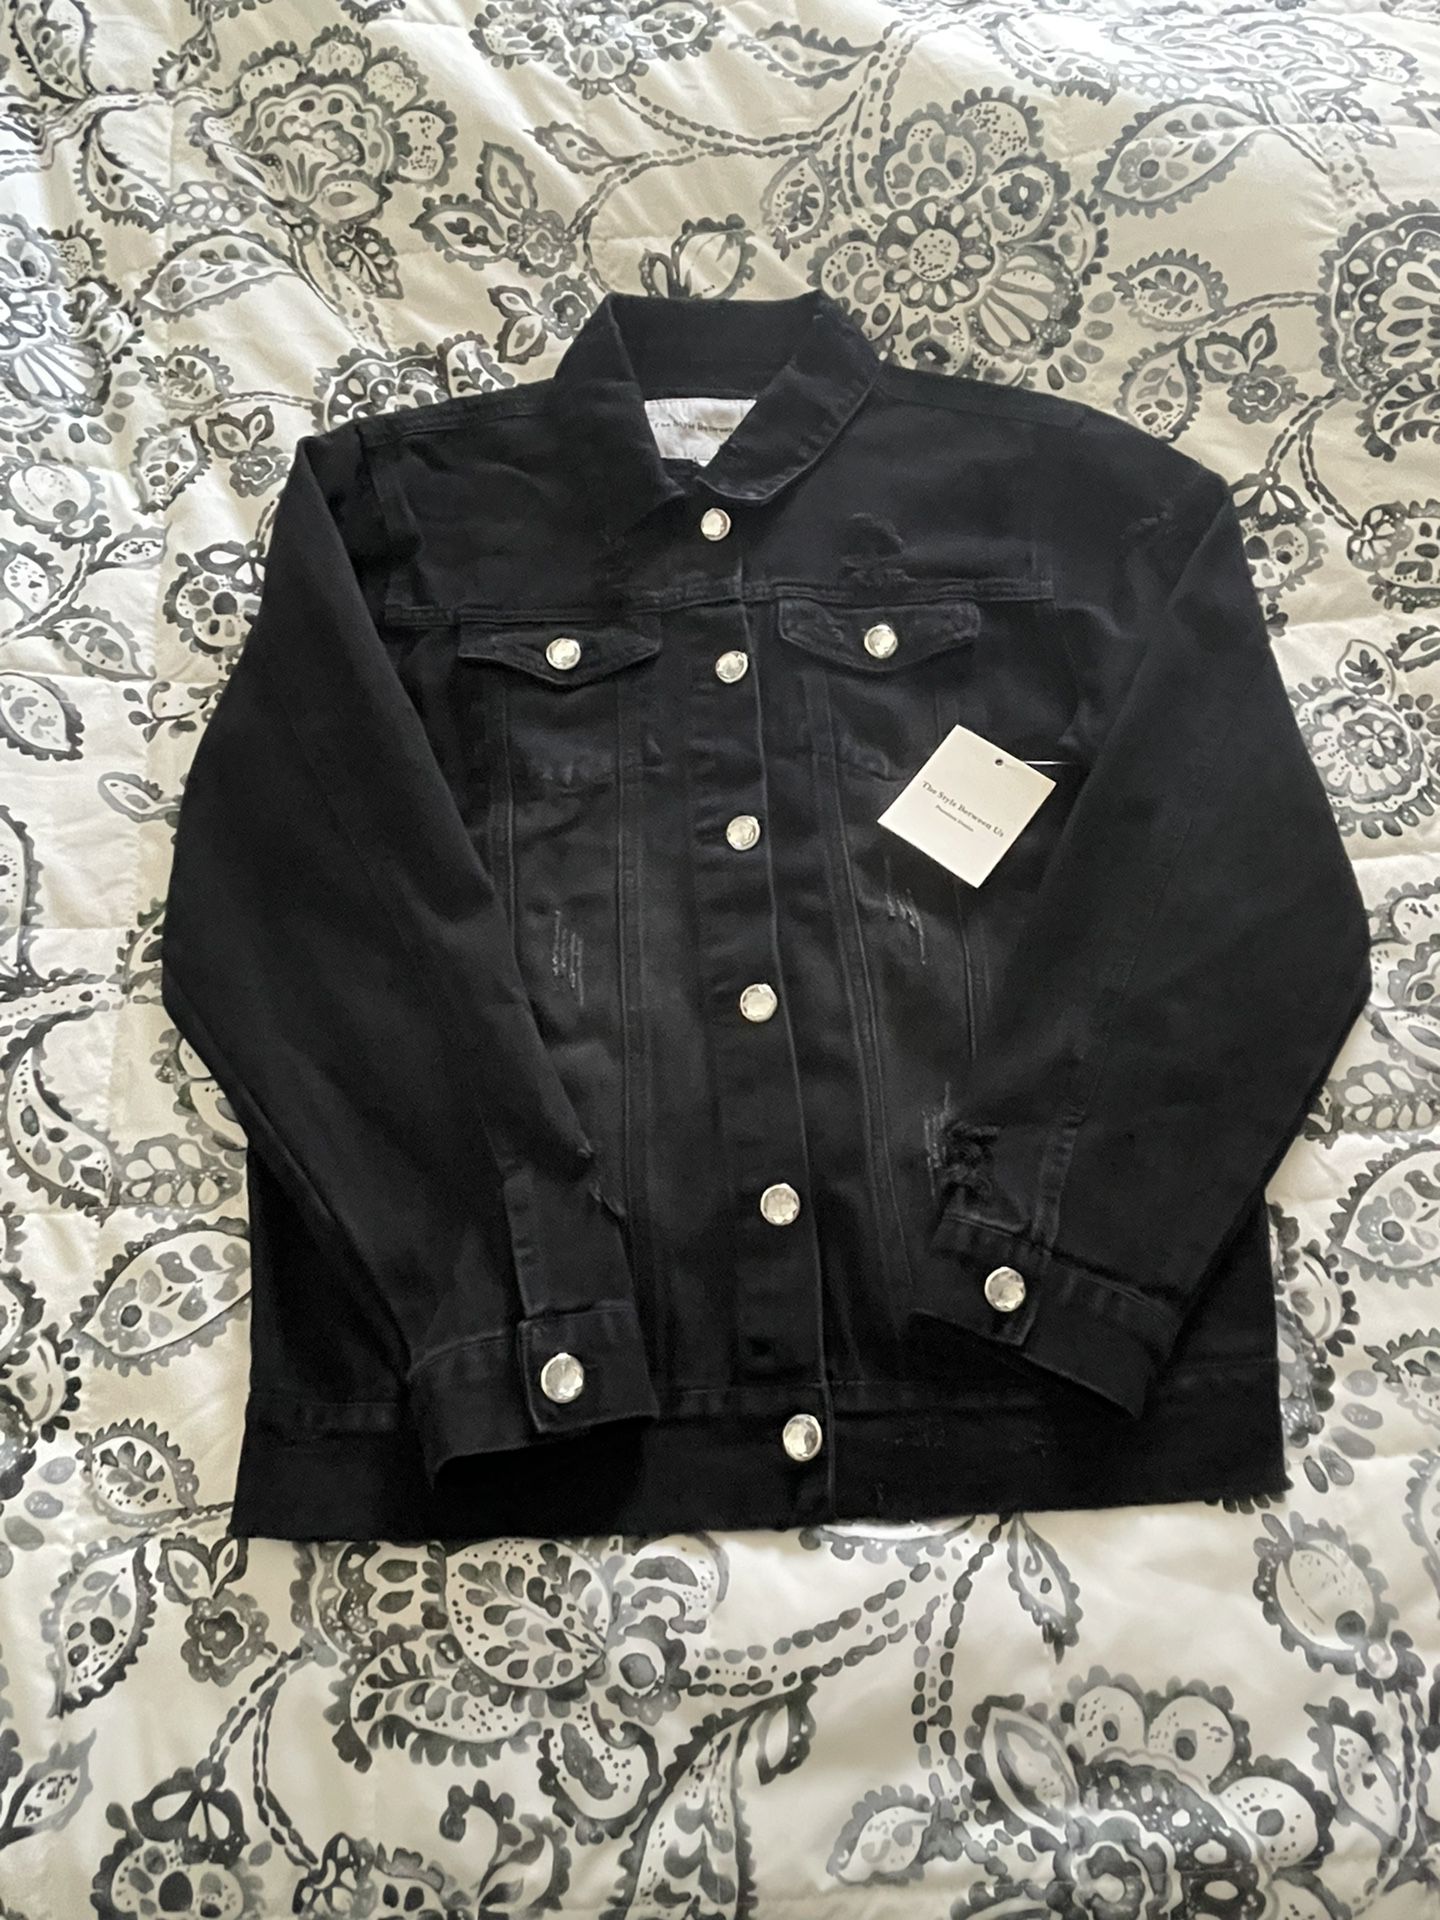 Distressed Black Denim Jackets Large 